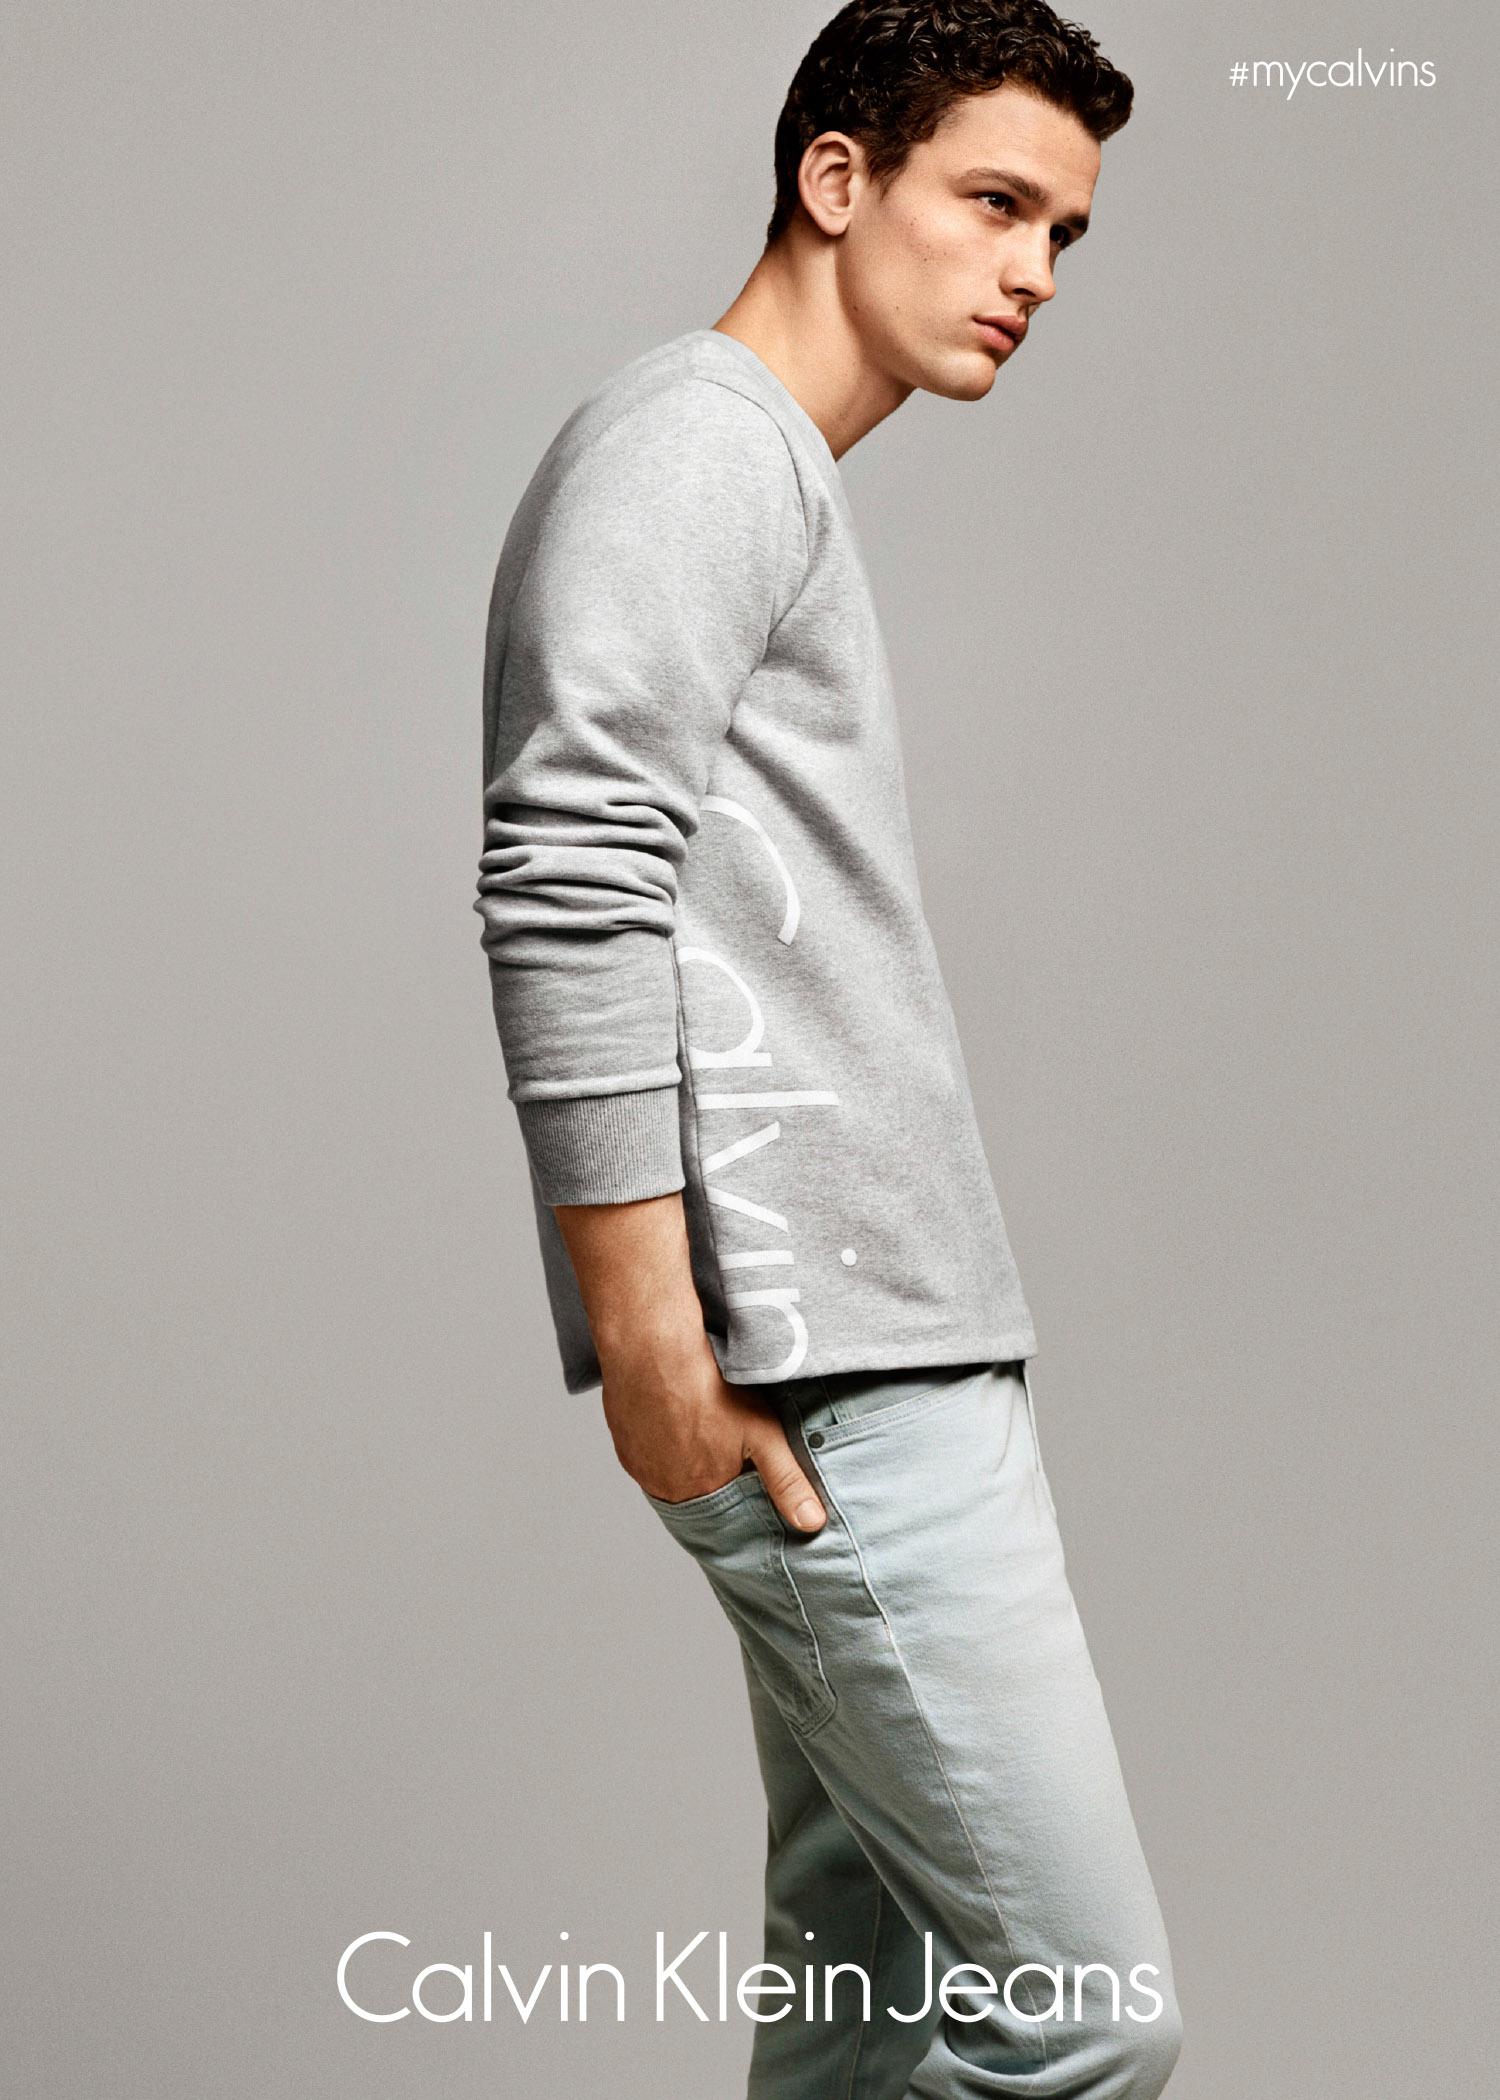 Simon Nessman per Denim Series di Calvin Klein Jeans